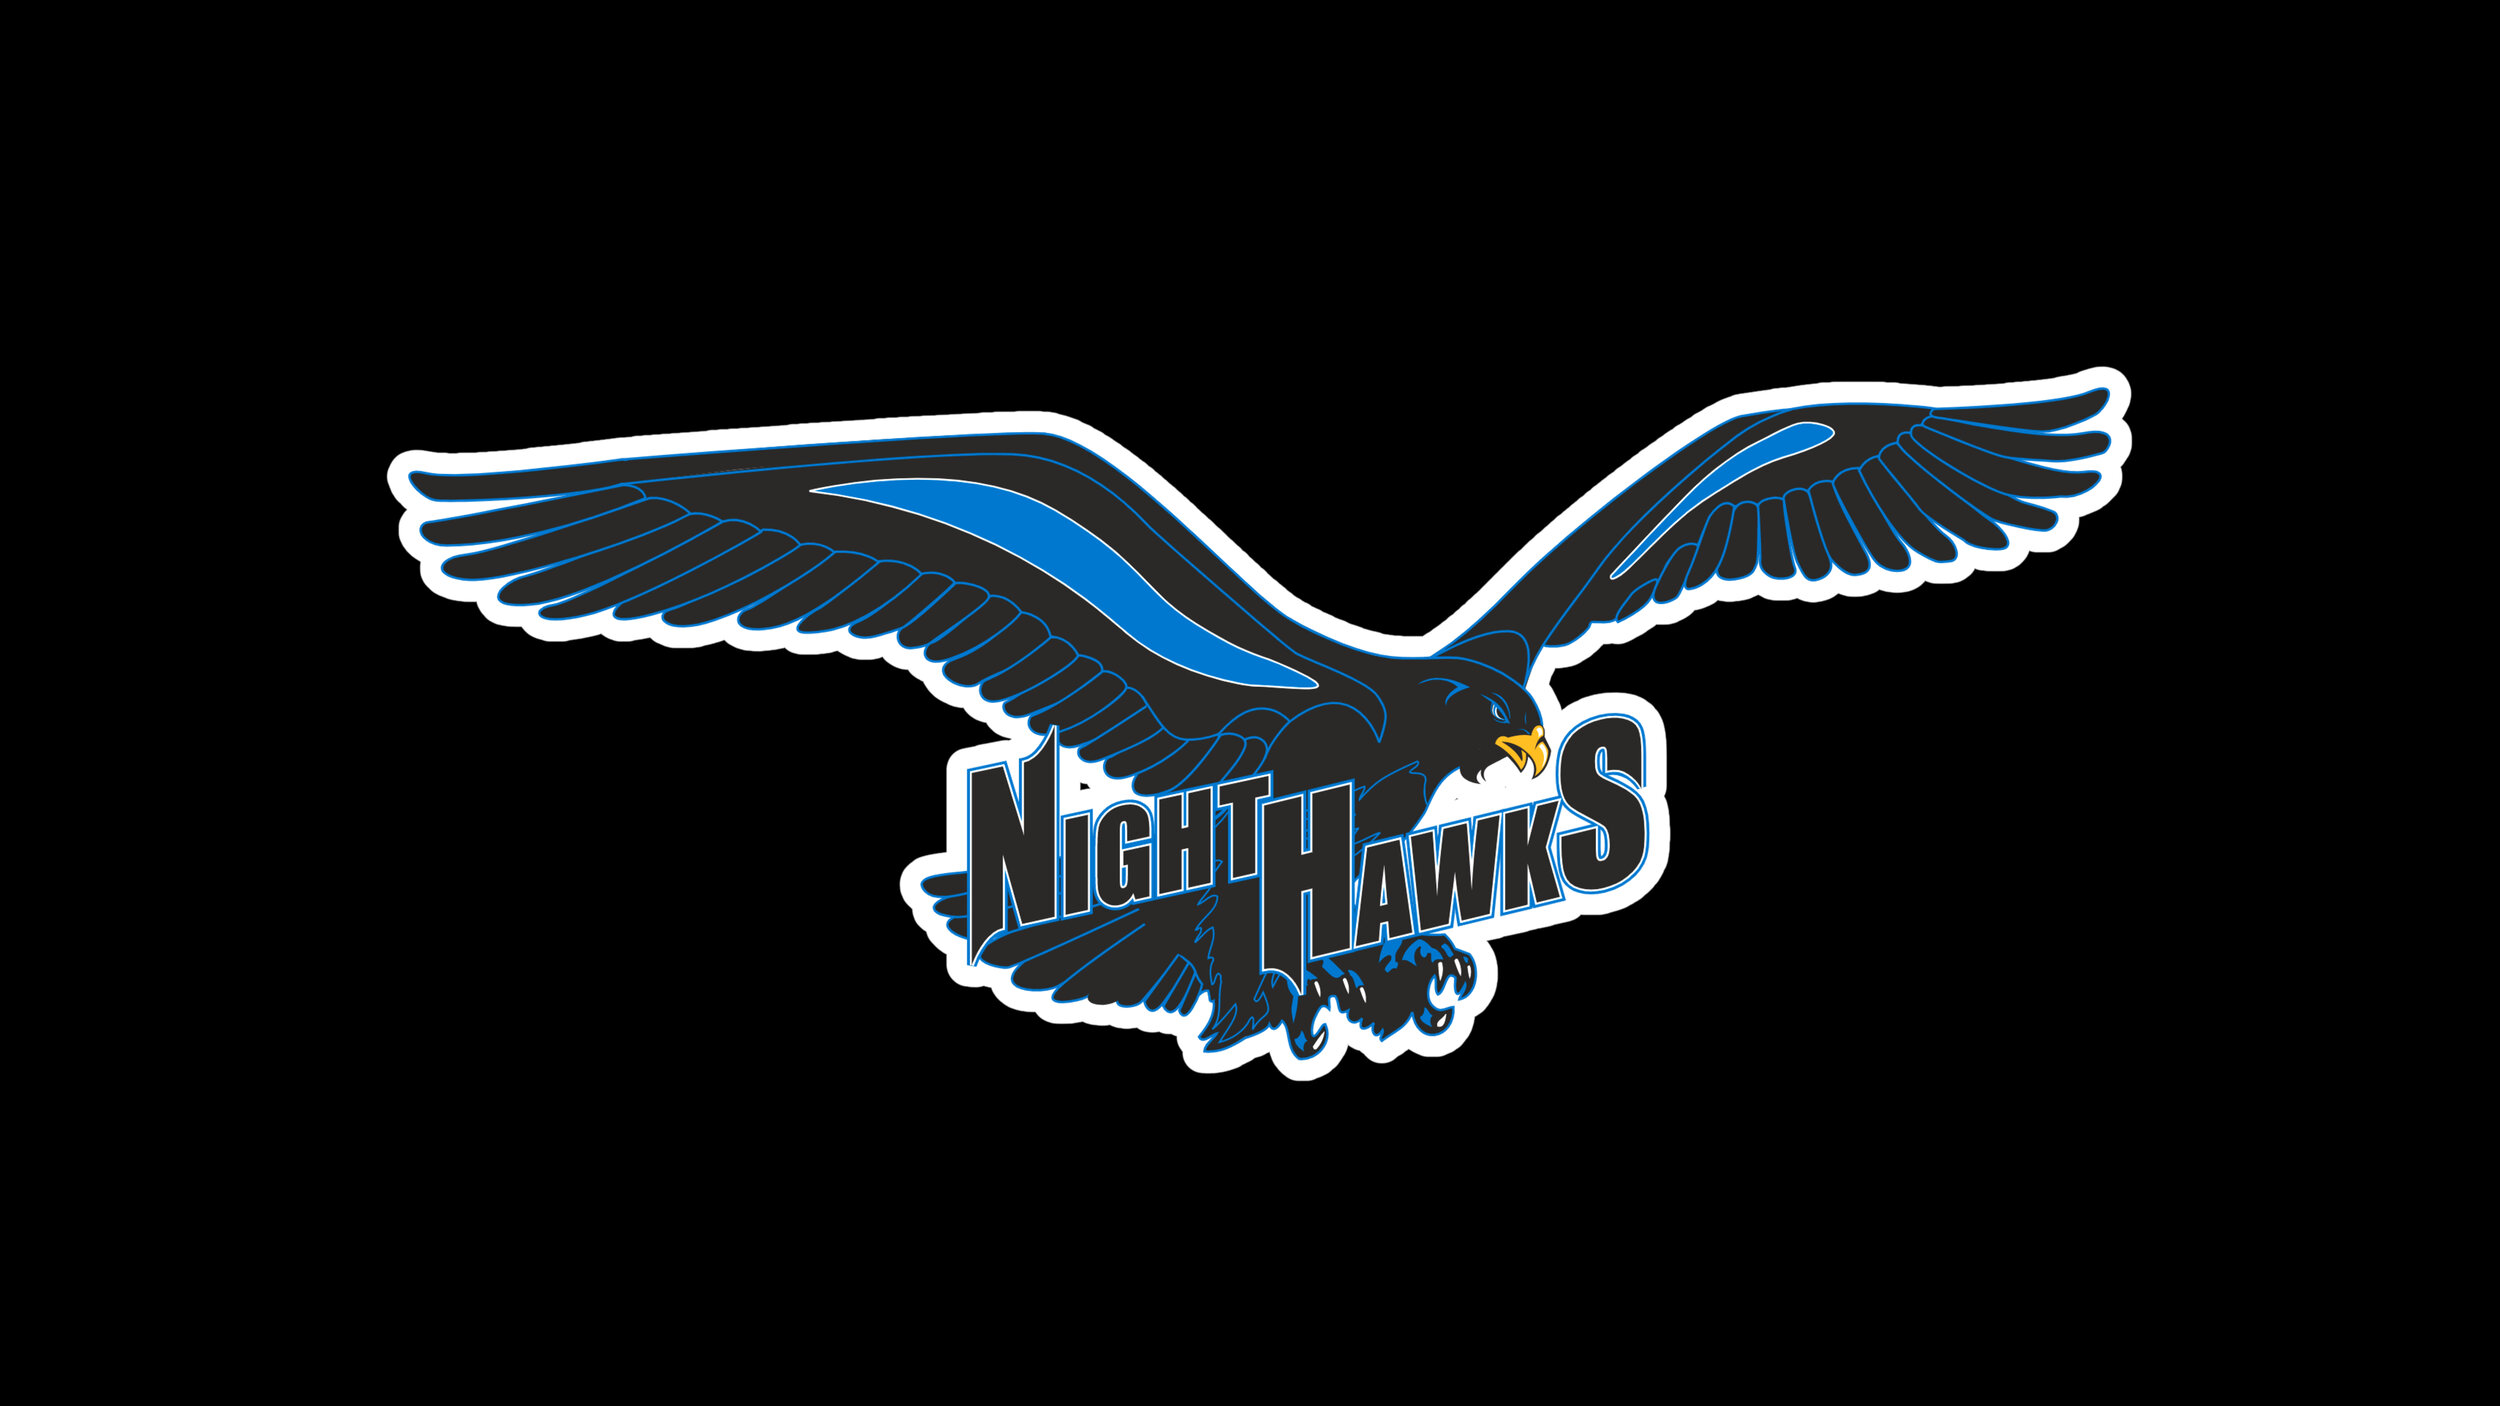 Nighthawks Wallpapers